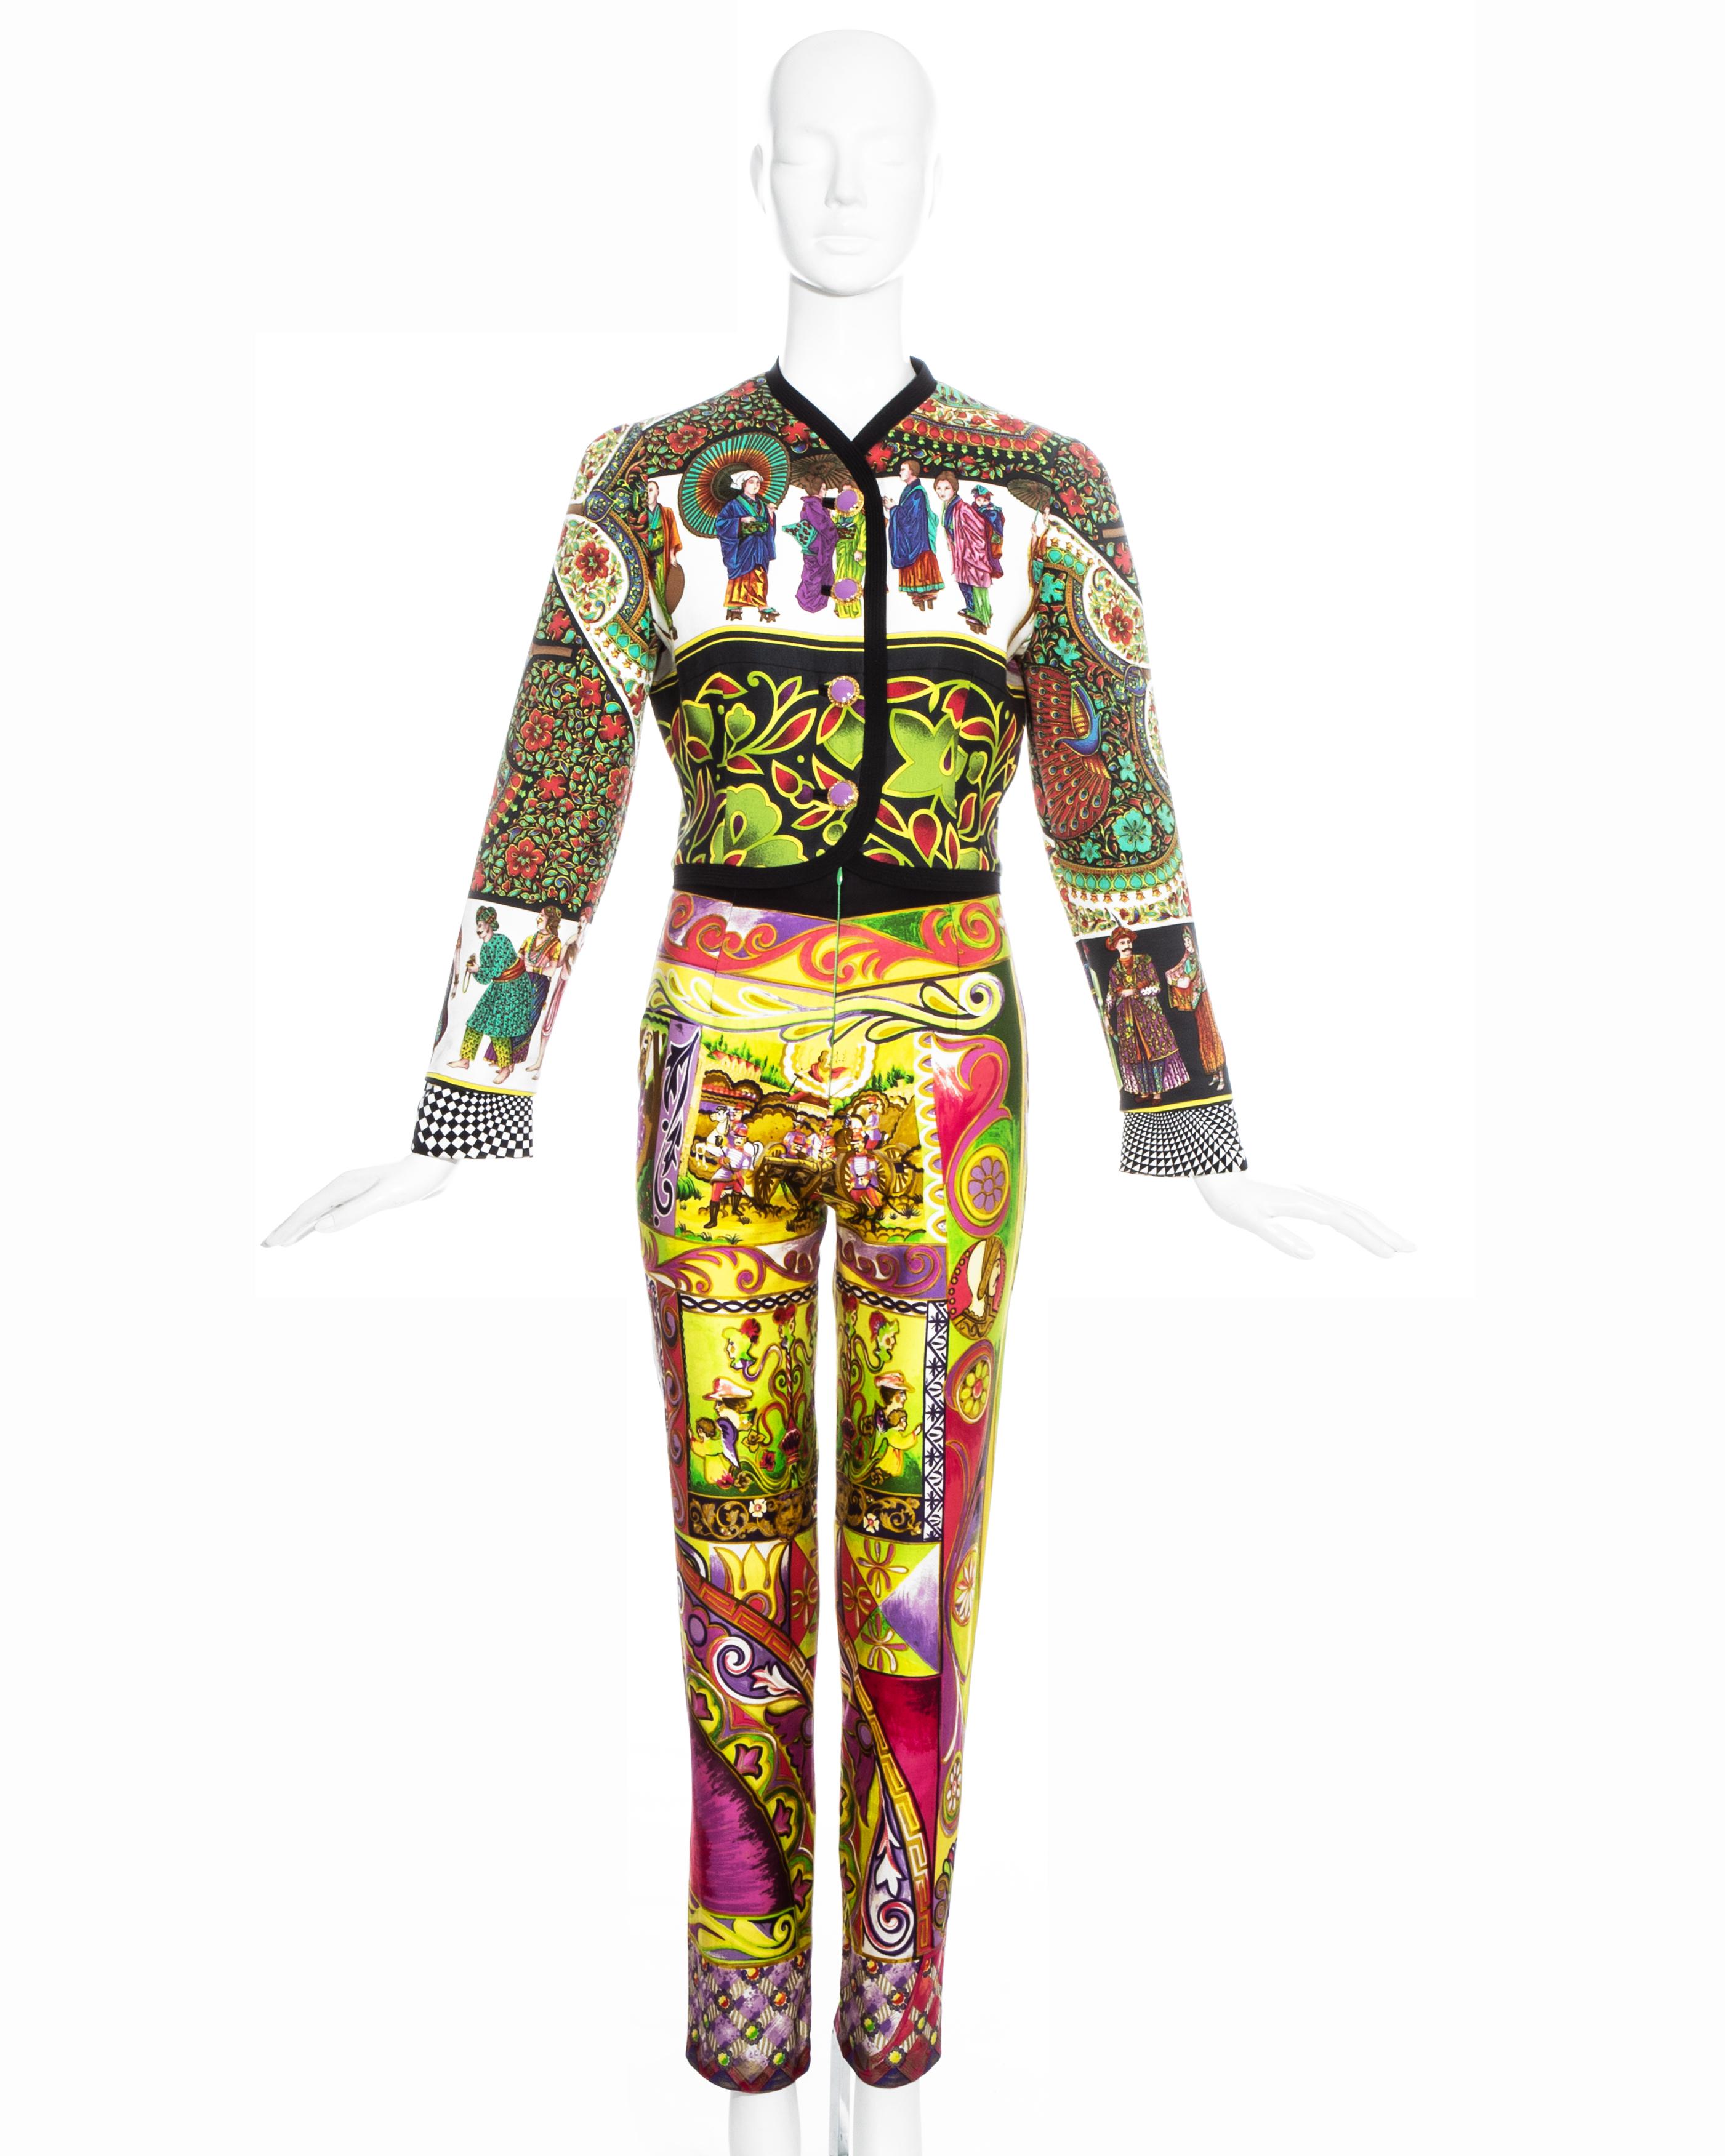 Gianni Versace multicoloured silk pant suit.

Spring-Summer 1992